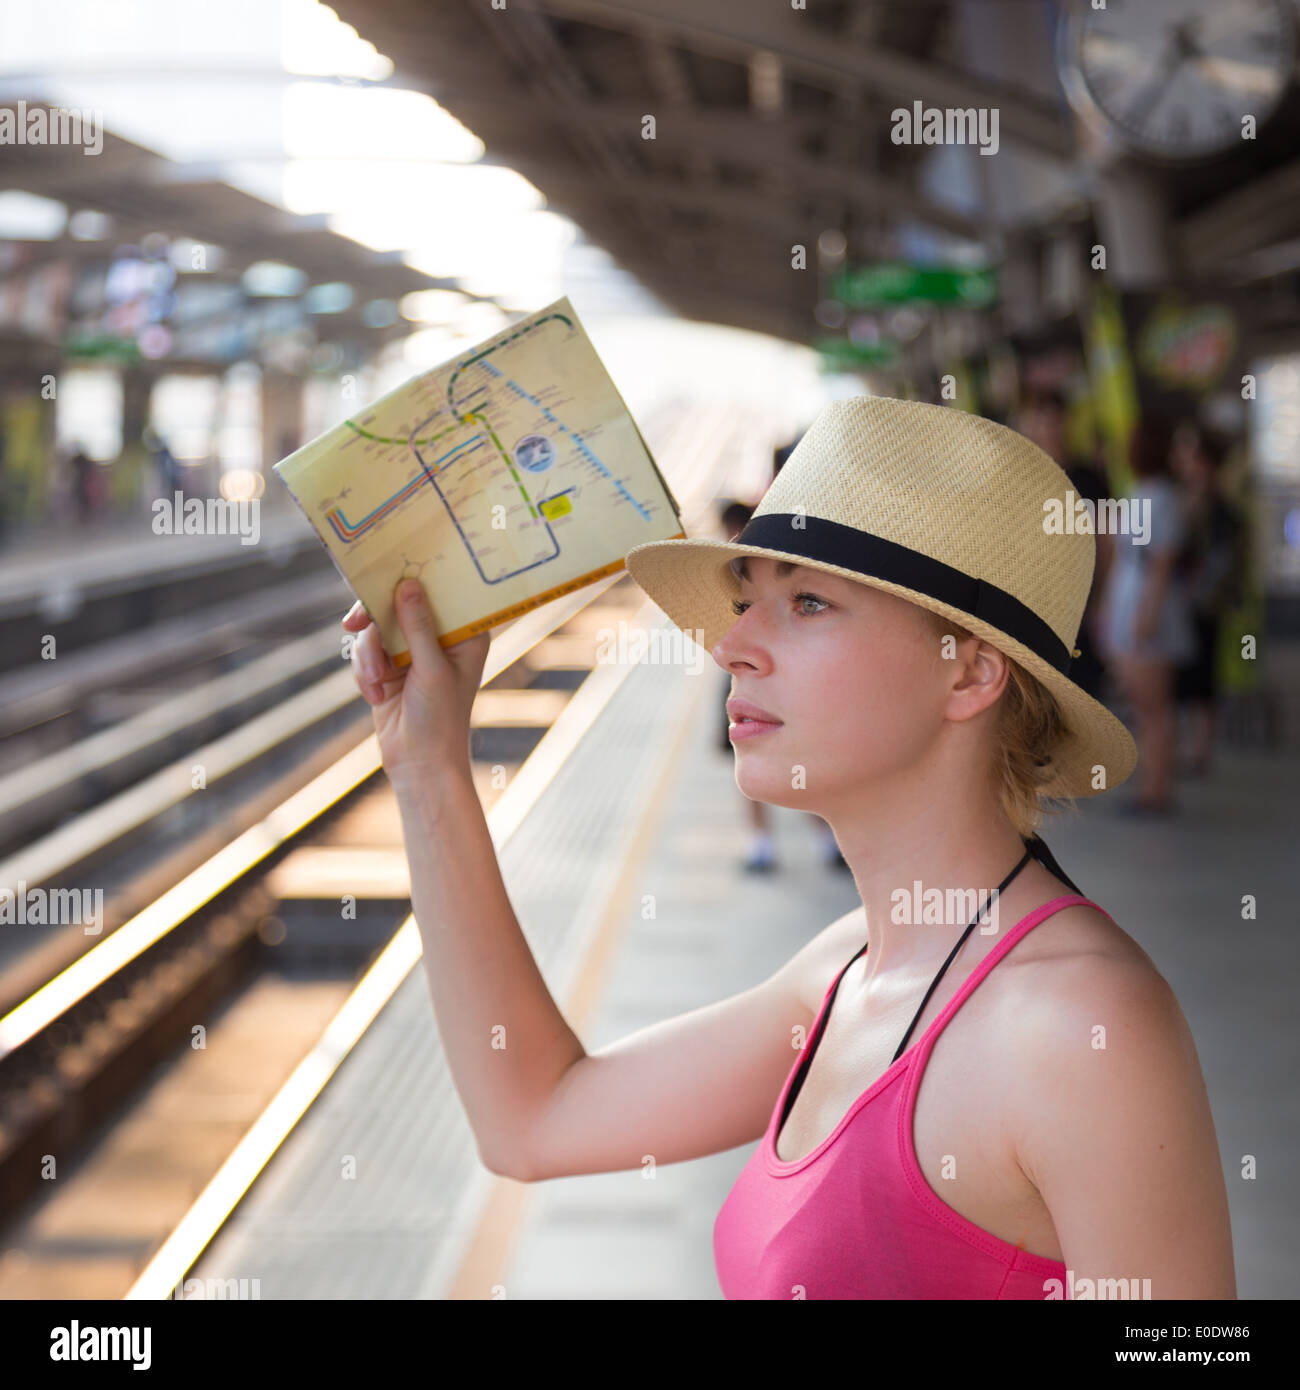 Приезд жд. Женщина на платформе. Селфи блондинки на ЖД вокзале. Идеи фото на вокзале для женщины. Wait on the platform.